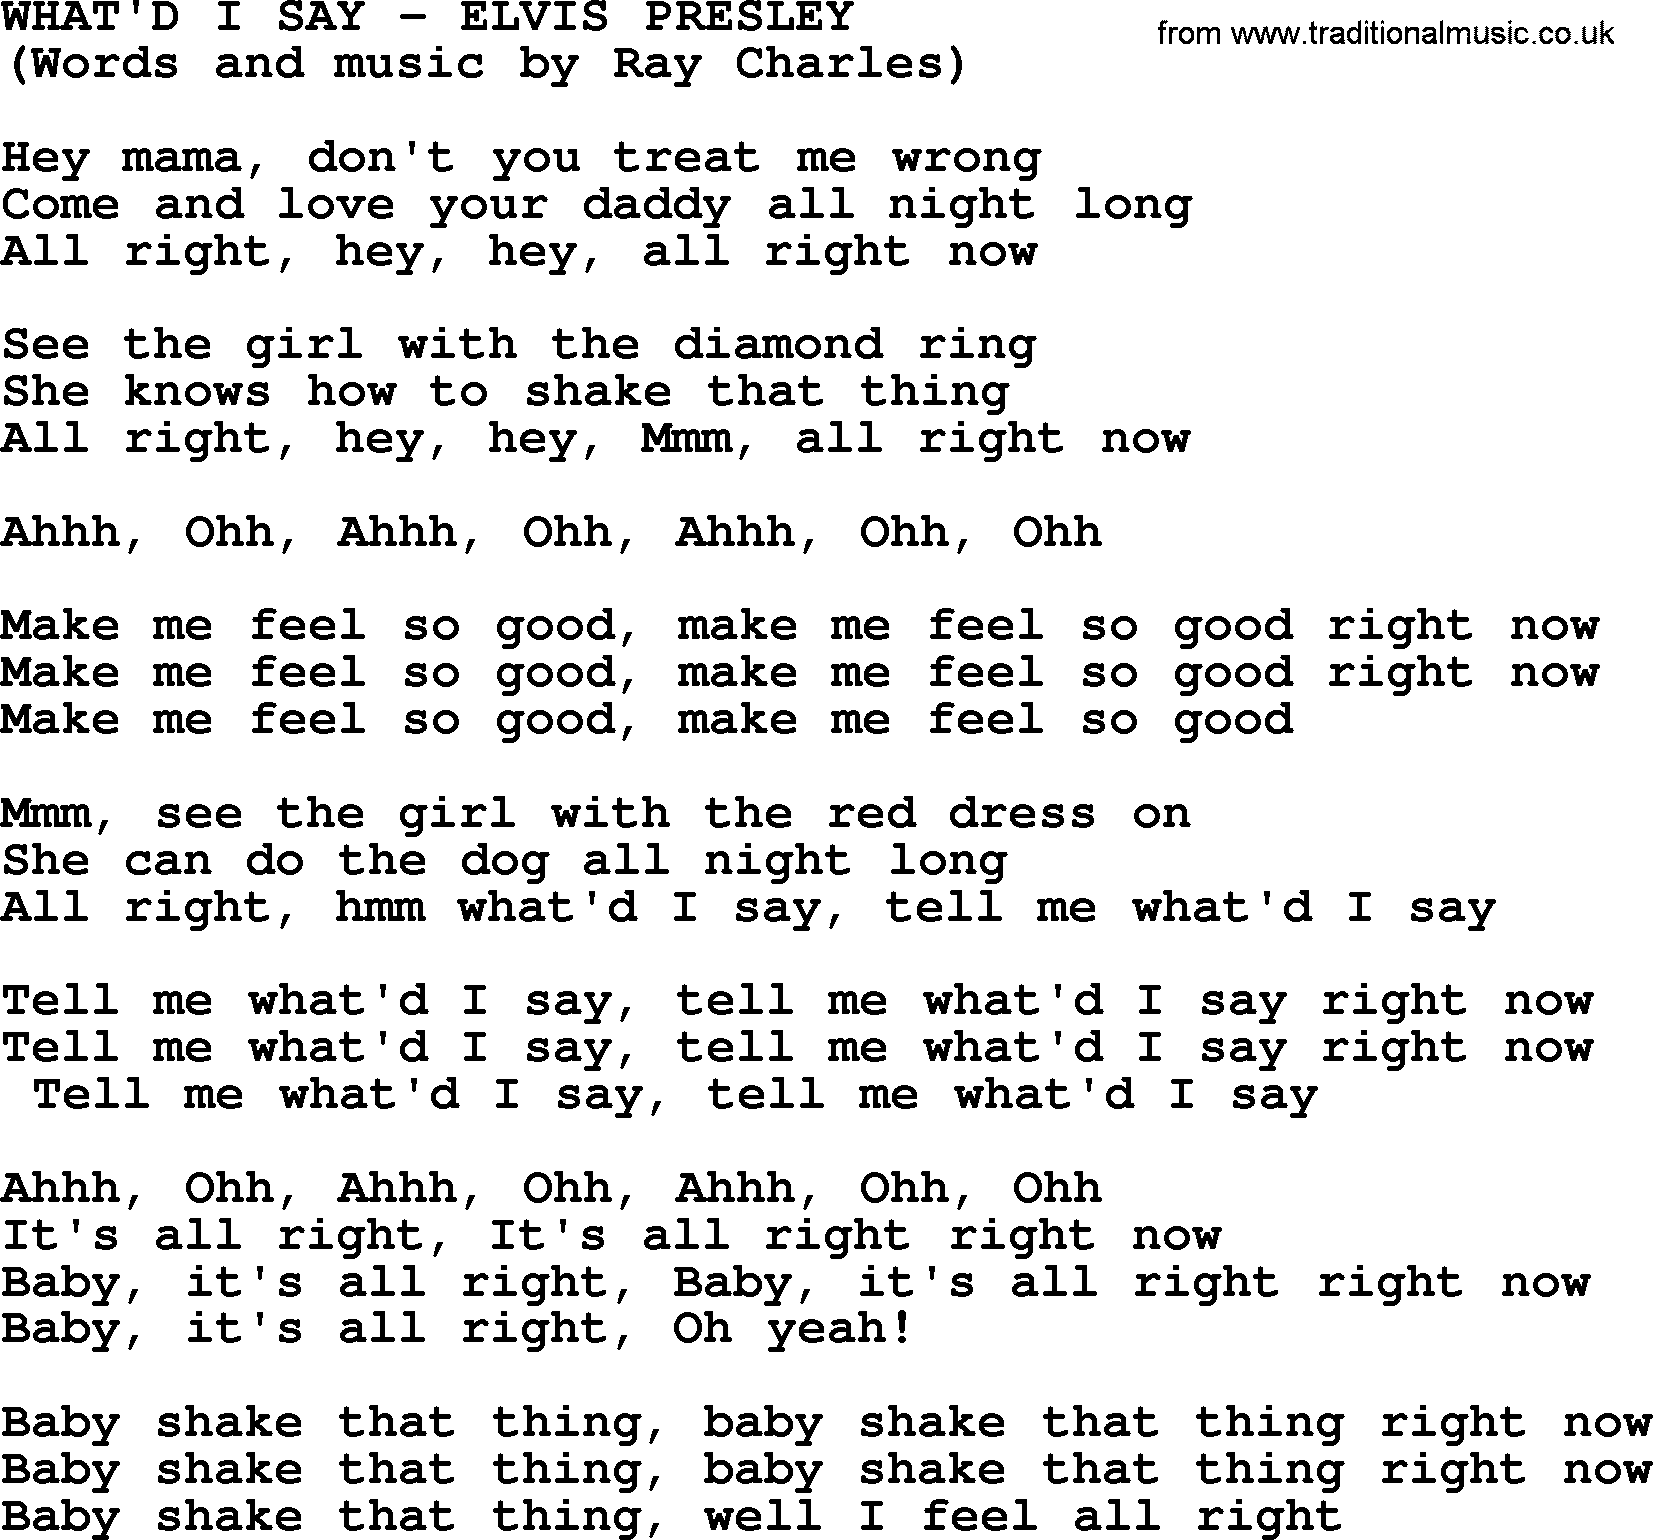 Elvis Presley song: What'd I Say lyrics